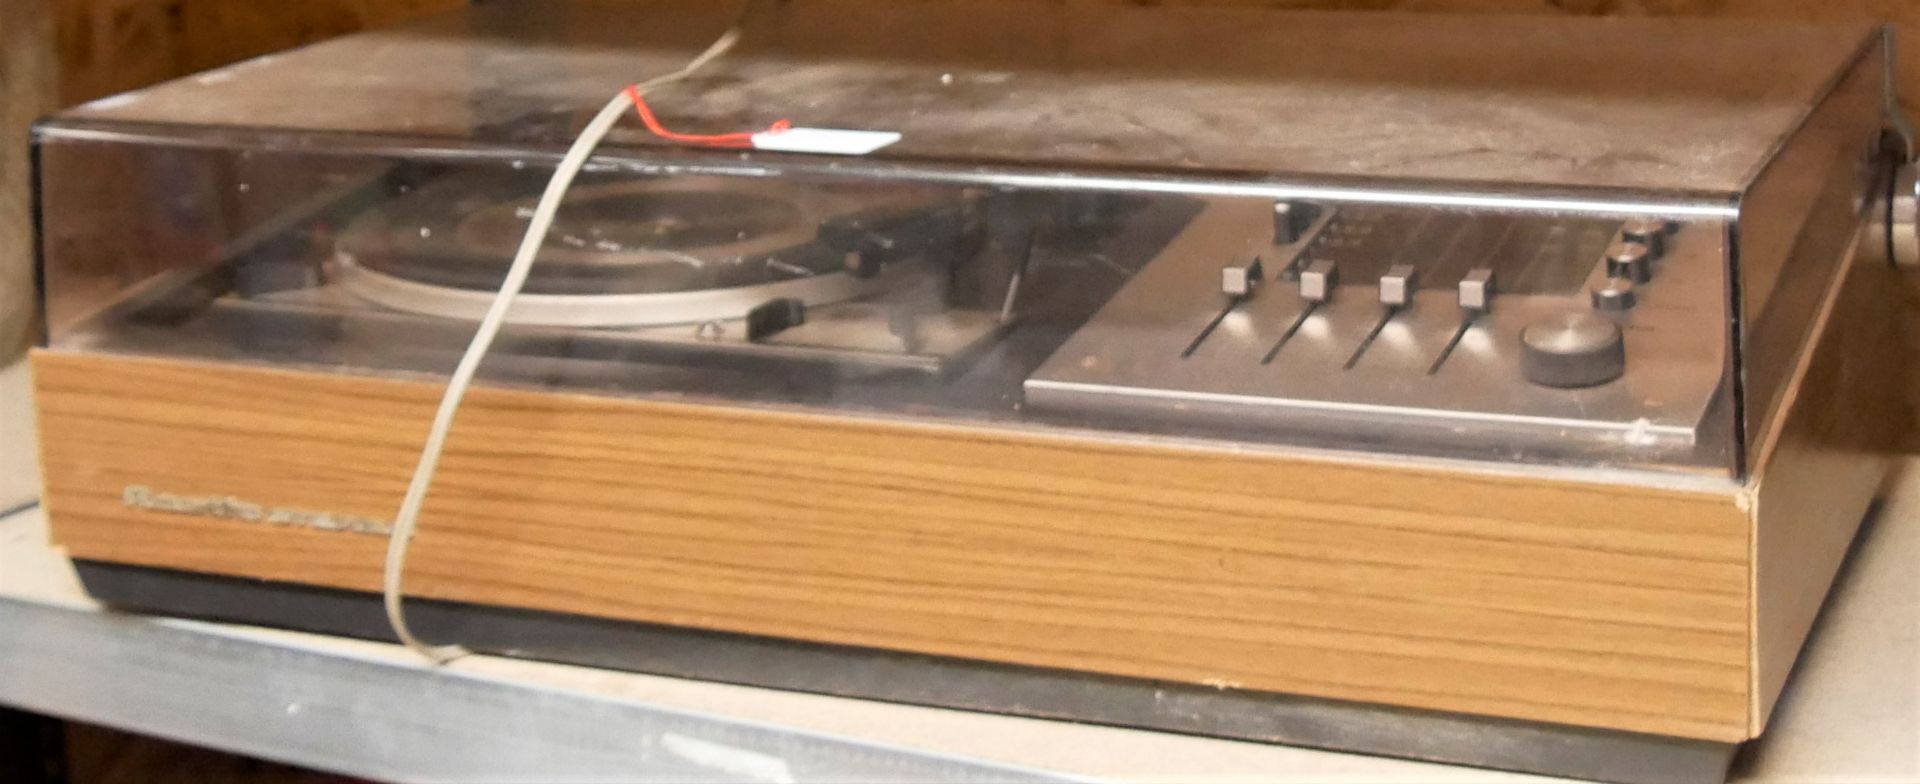 Rosita Stereo Plattenspieler, dual. Funktion nicht geprüft. Maße: Länge ca. 67 cm, höhe ca. 20 cm,